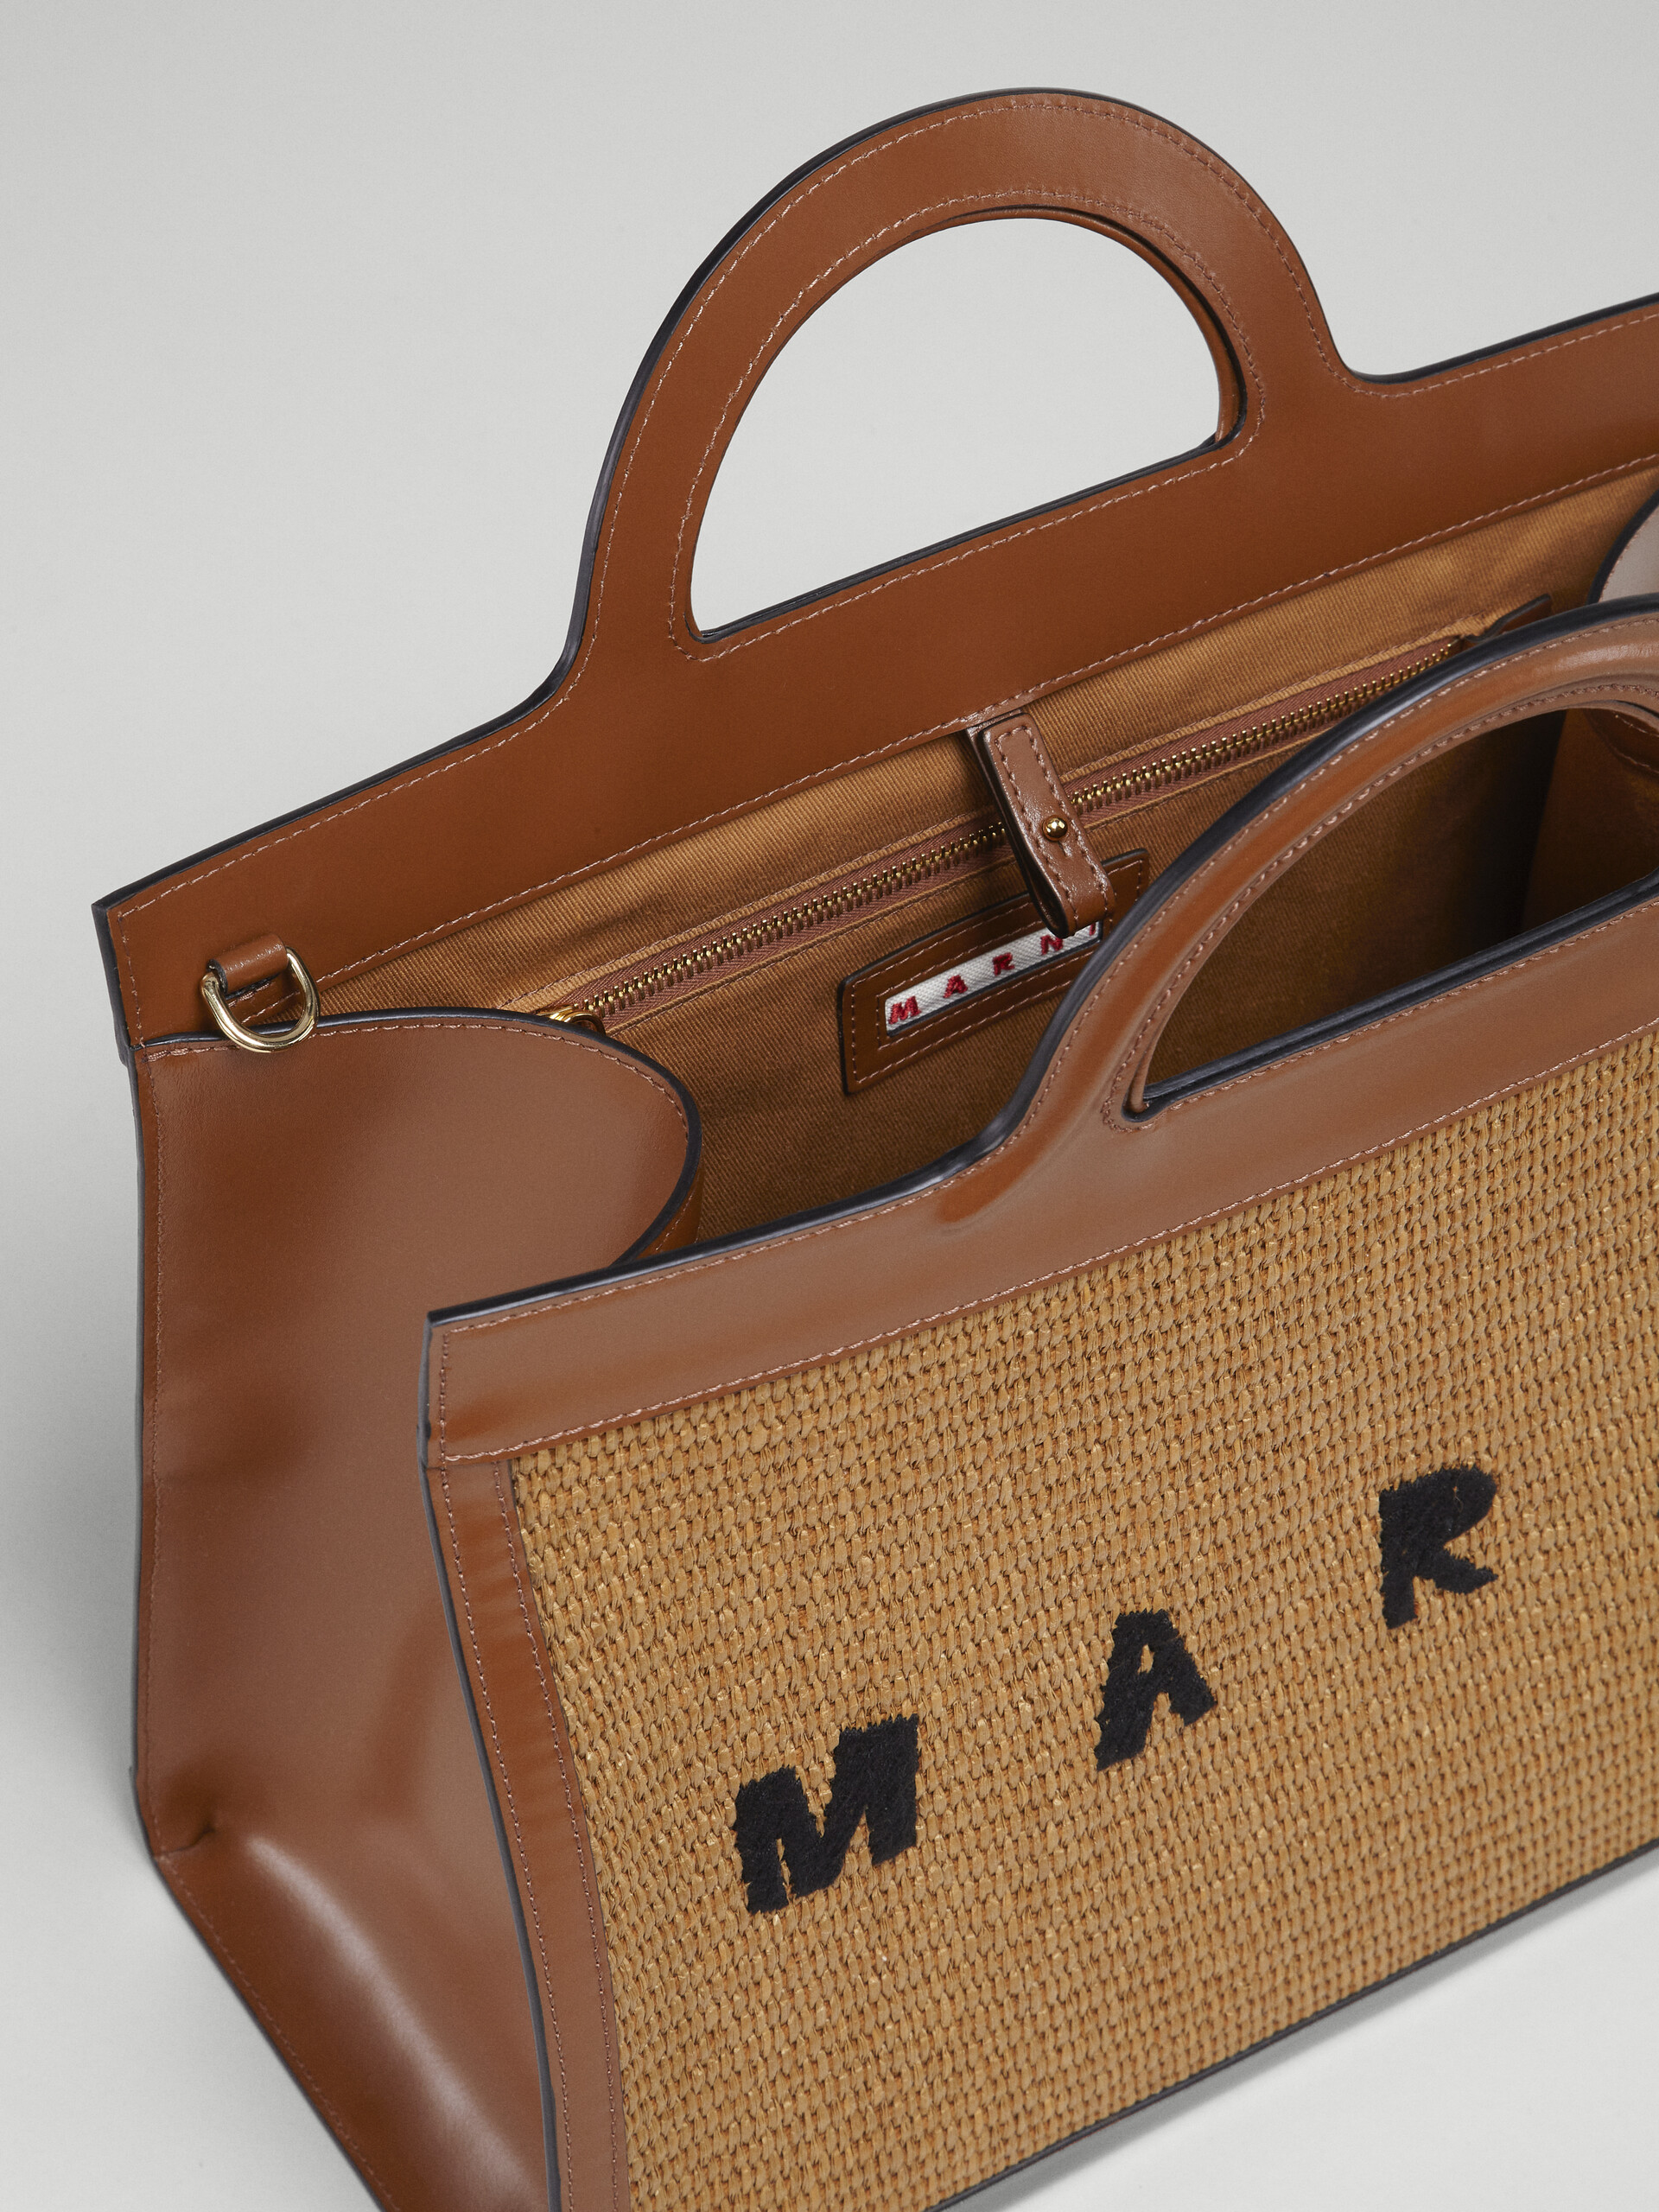 TROPICALIA tote bag in brown leather and raffia - Handbag - Image 5